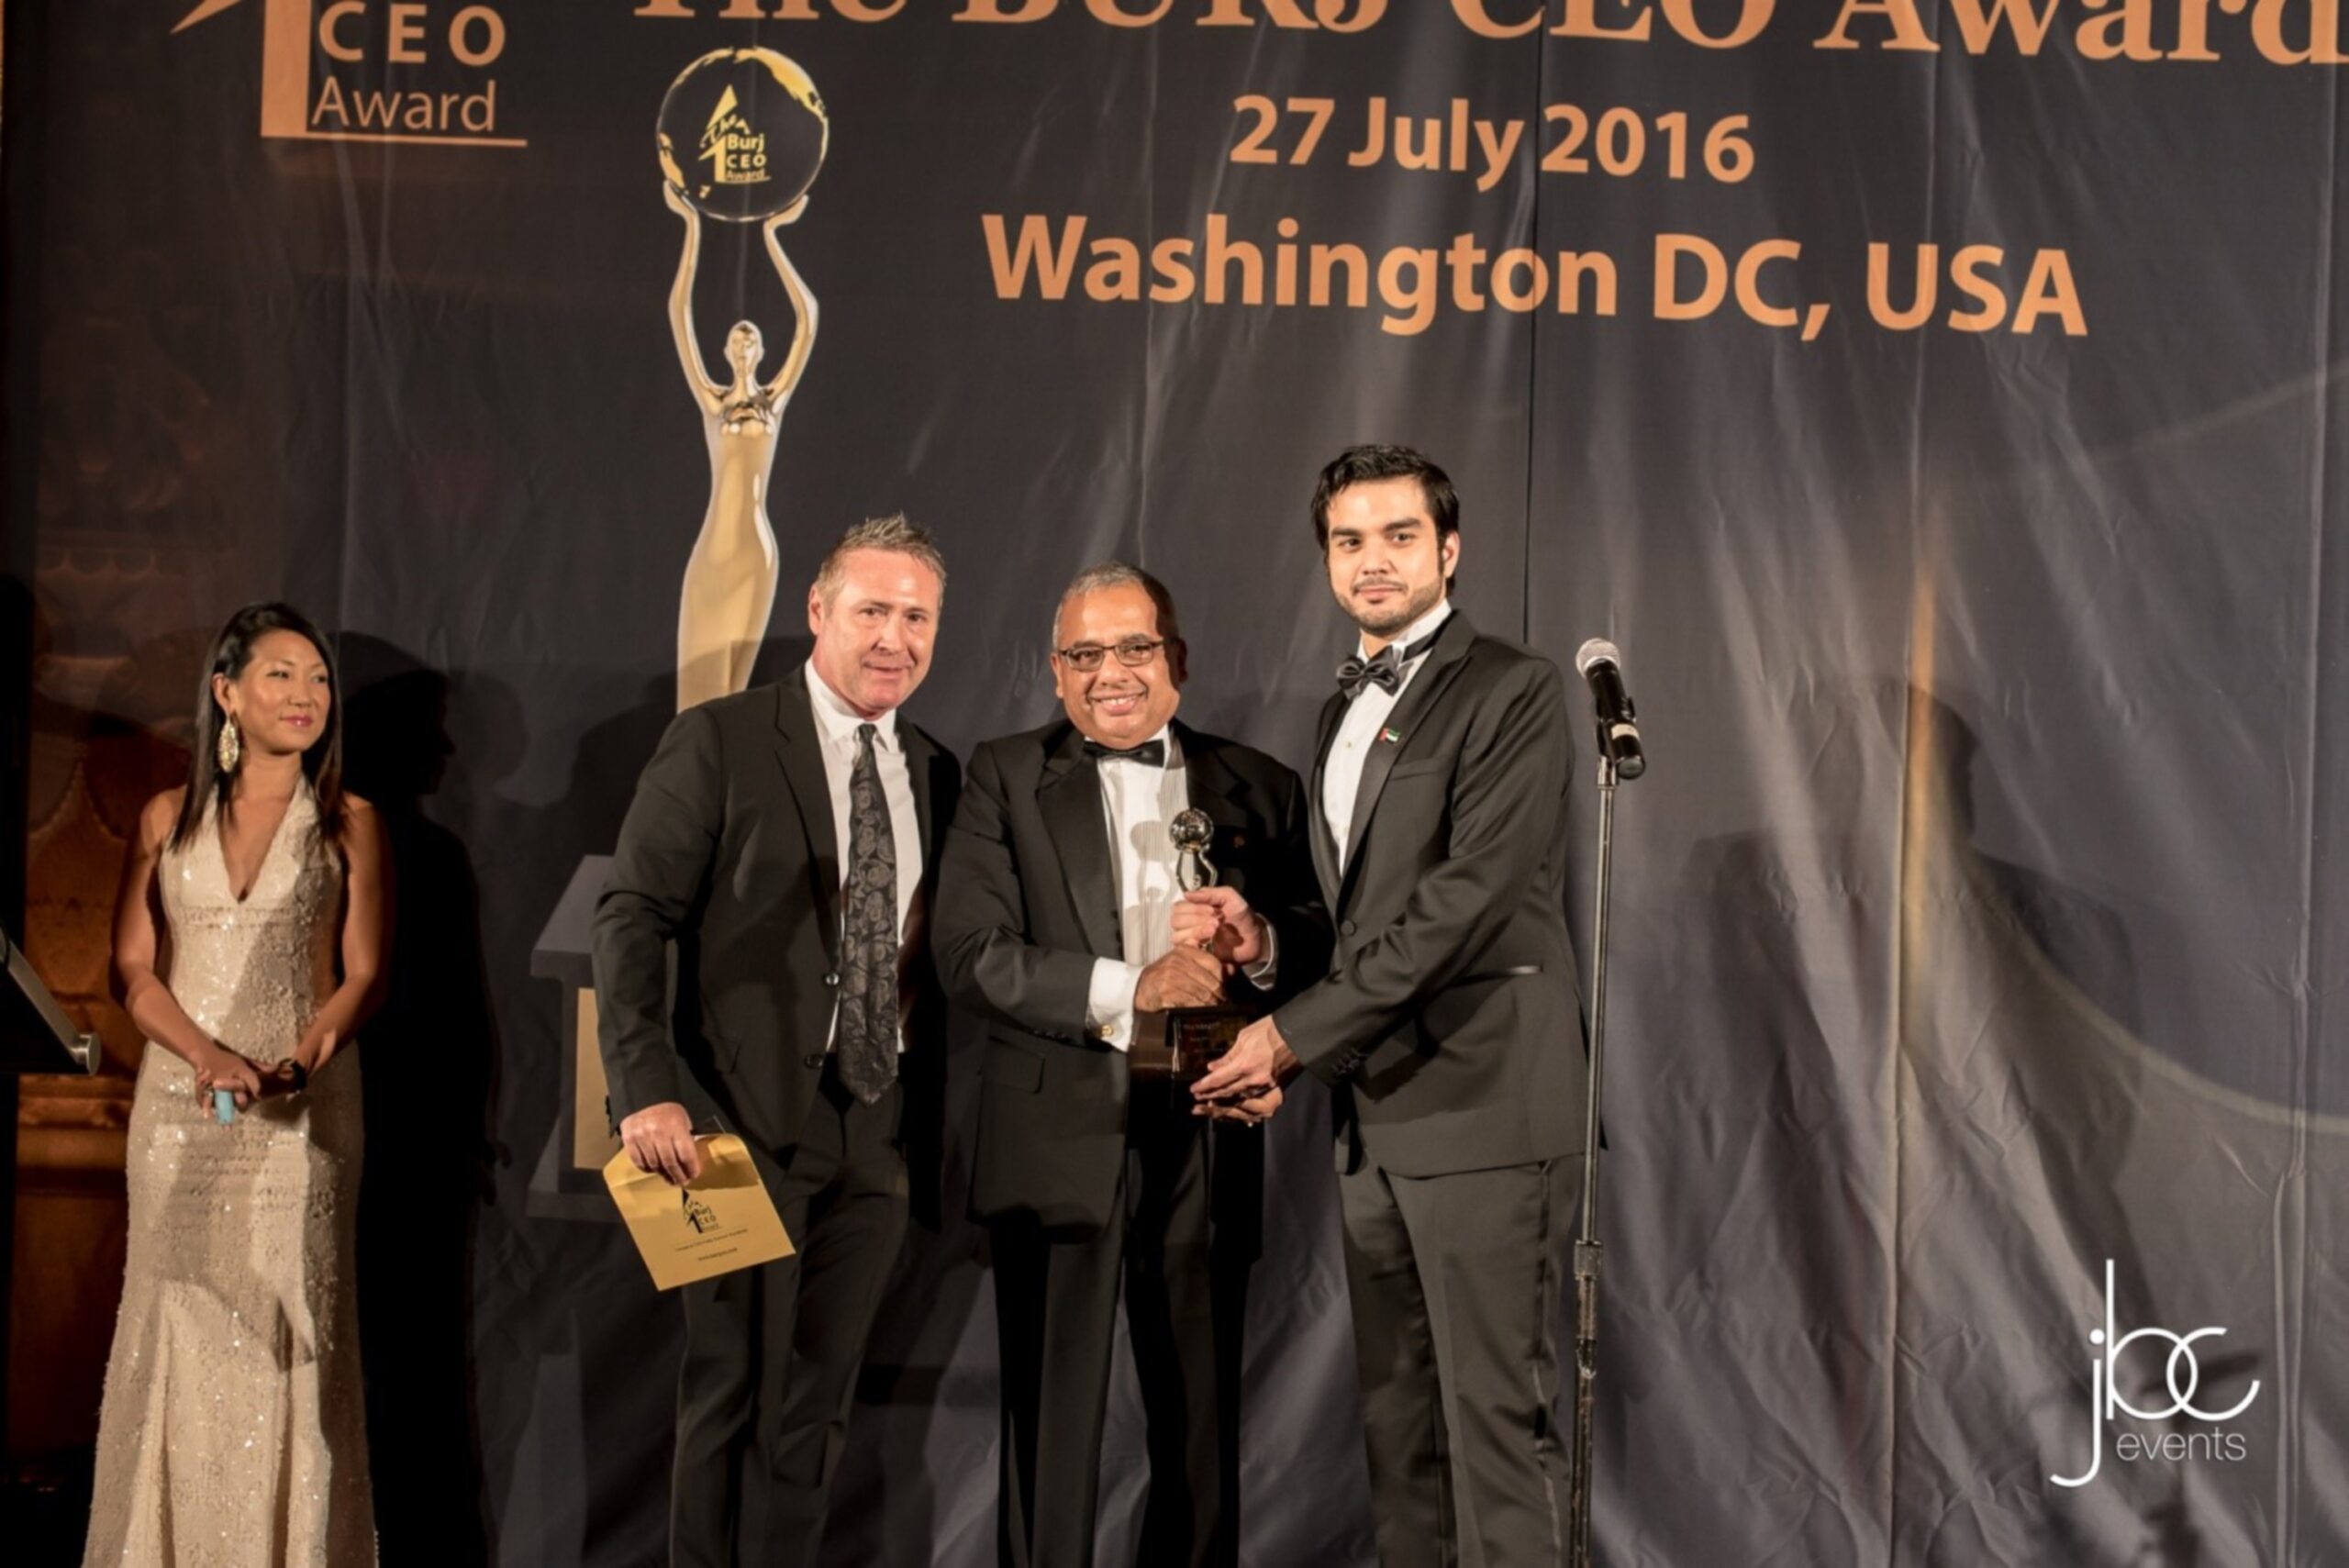 Proud moment: Dubai Duty Free Chief Operating Officer Ramesh Cidambi, accepts the award